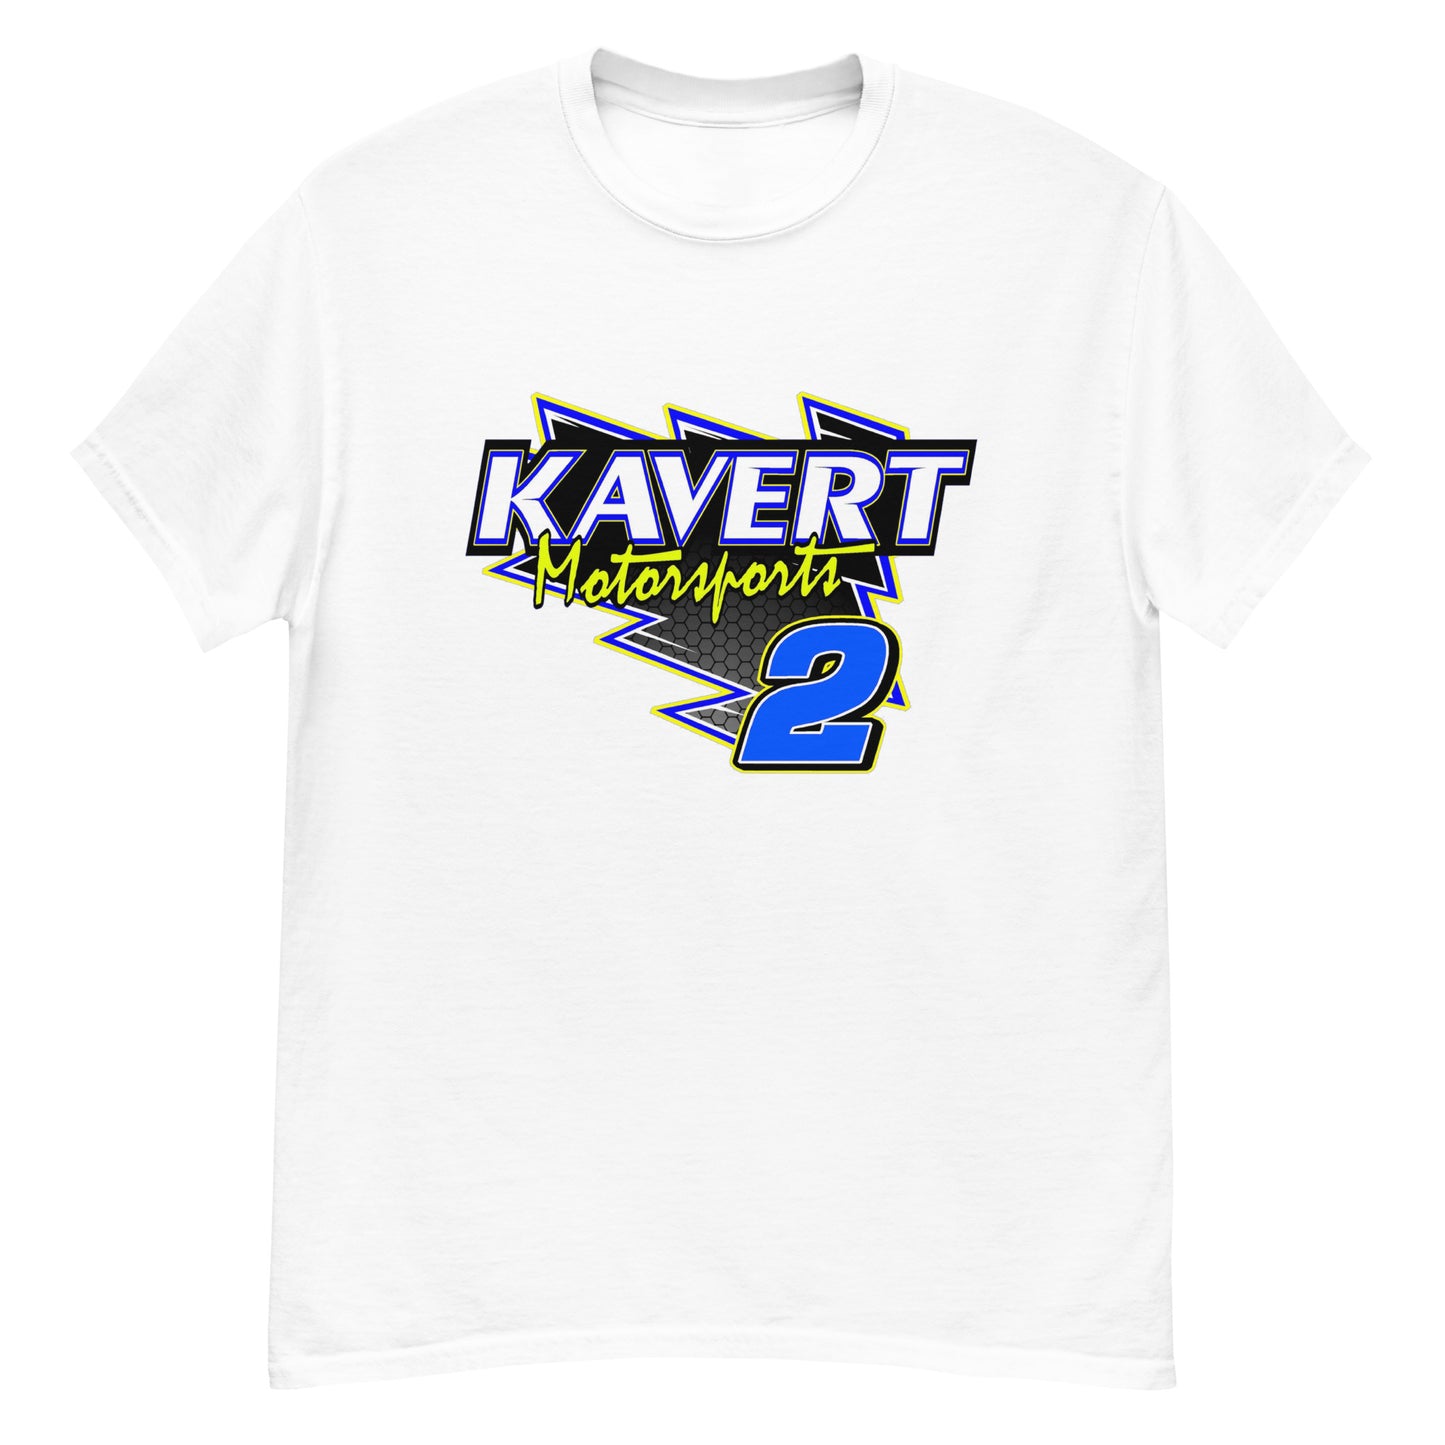 Kavert Motorsports Adult T-Shirt